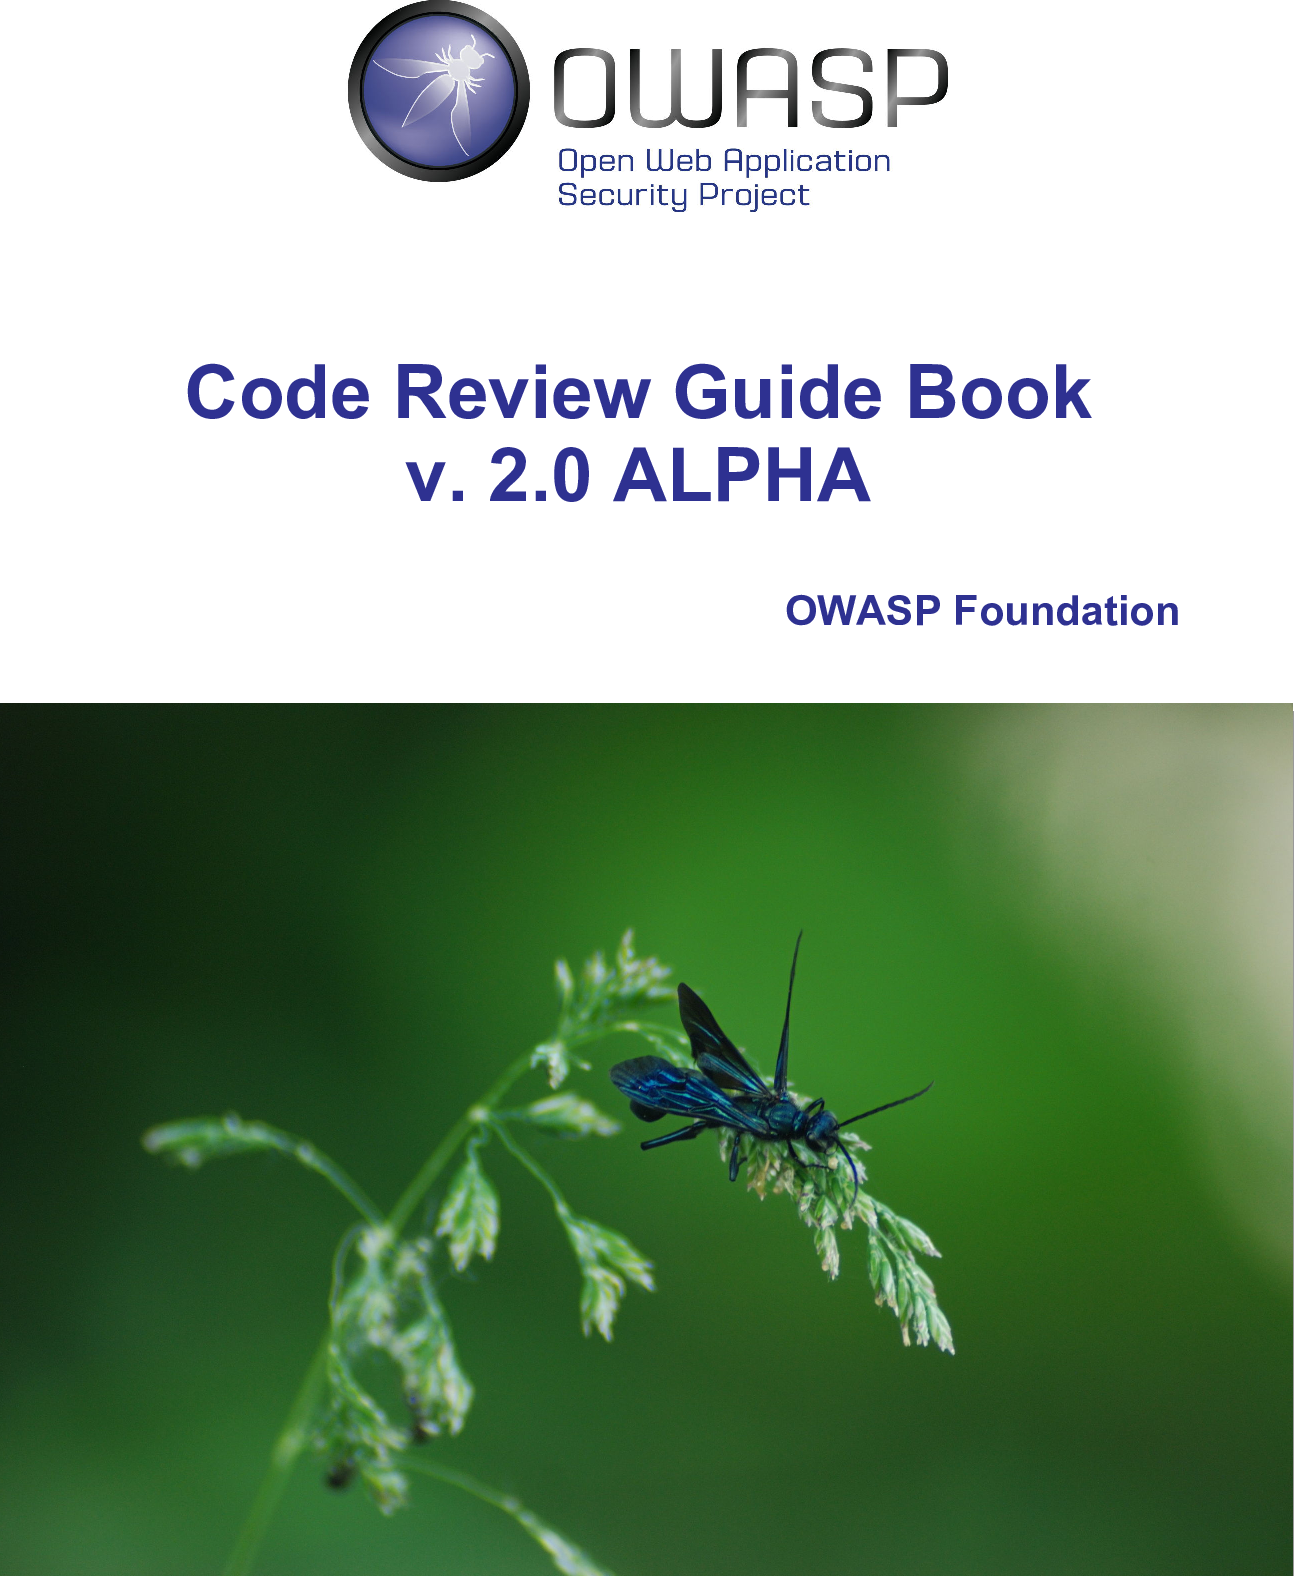 OWASP Code Review Guide